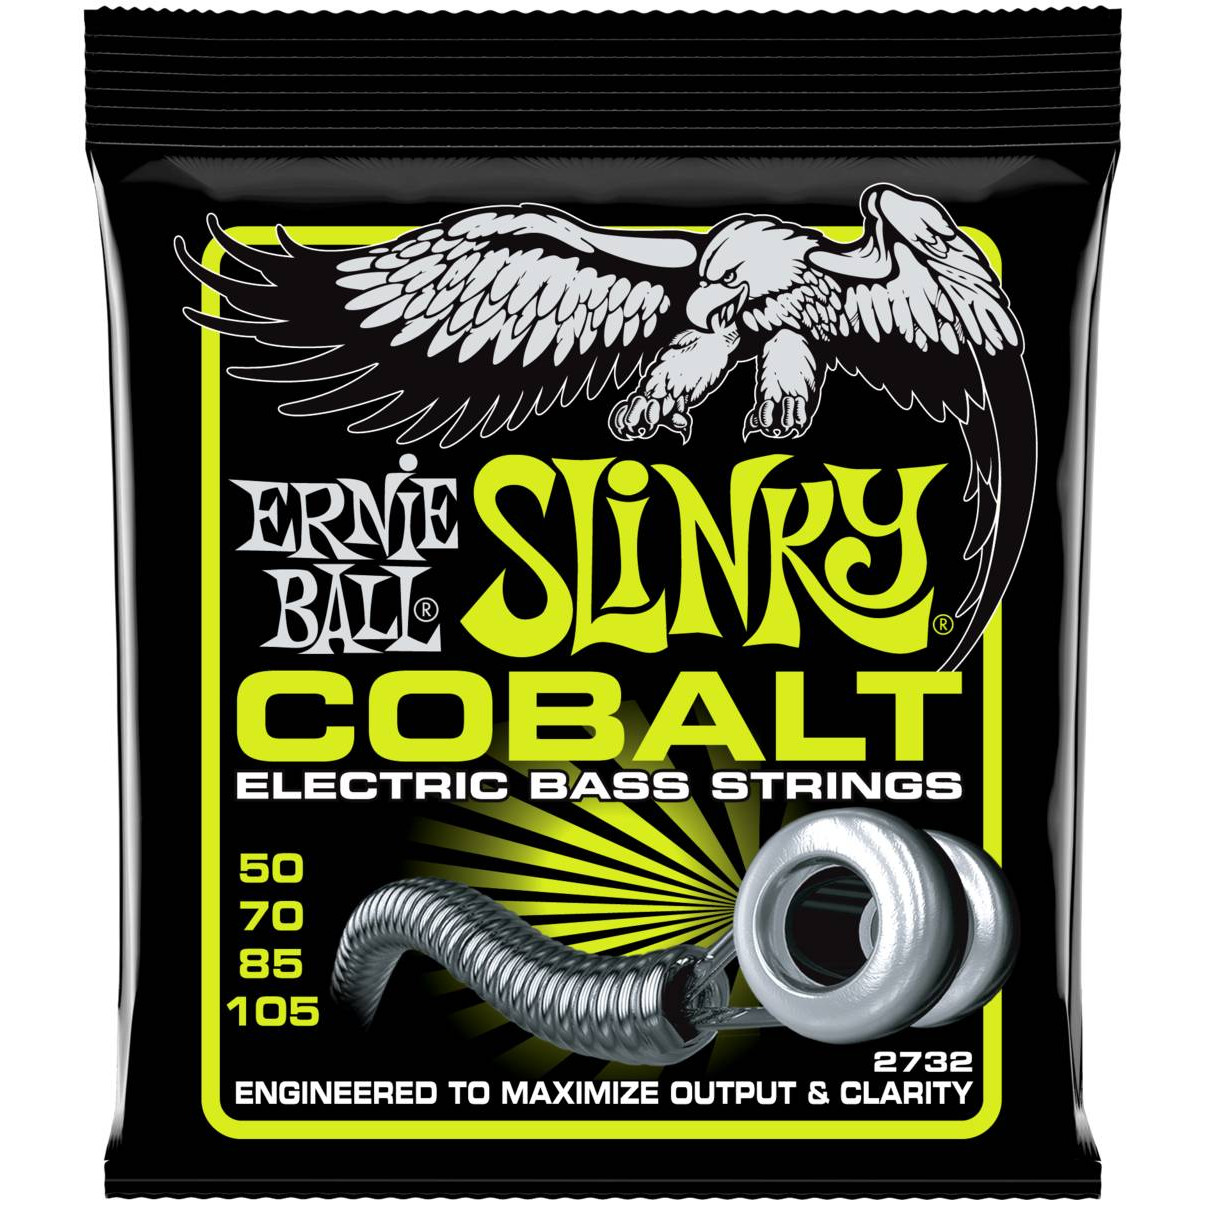 Струны Ernie Ball 2732 Slinky Cobalt Regular струны ernie ball 3721 regular slinky cobalt